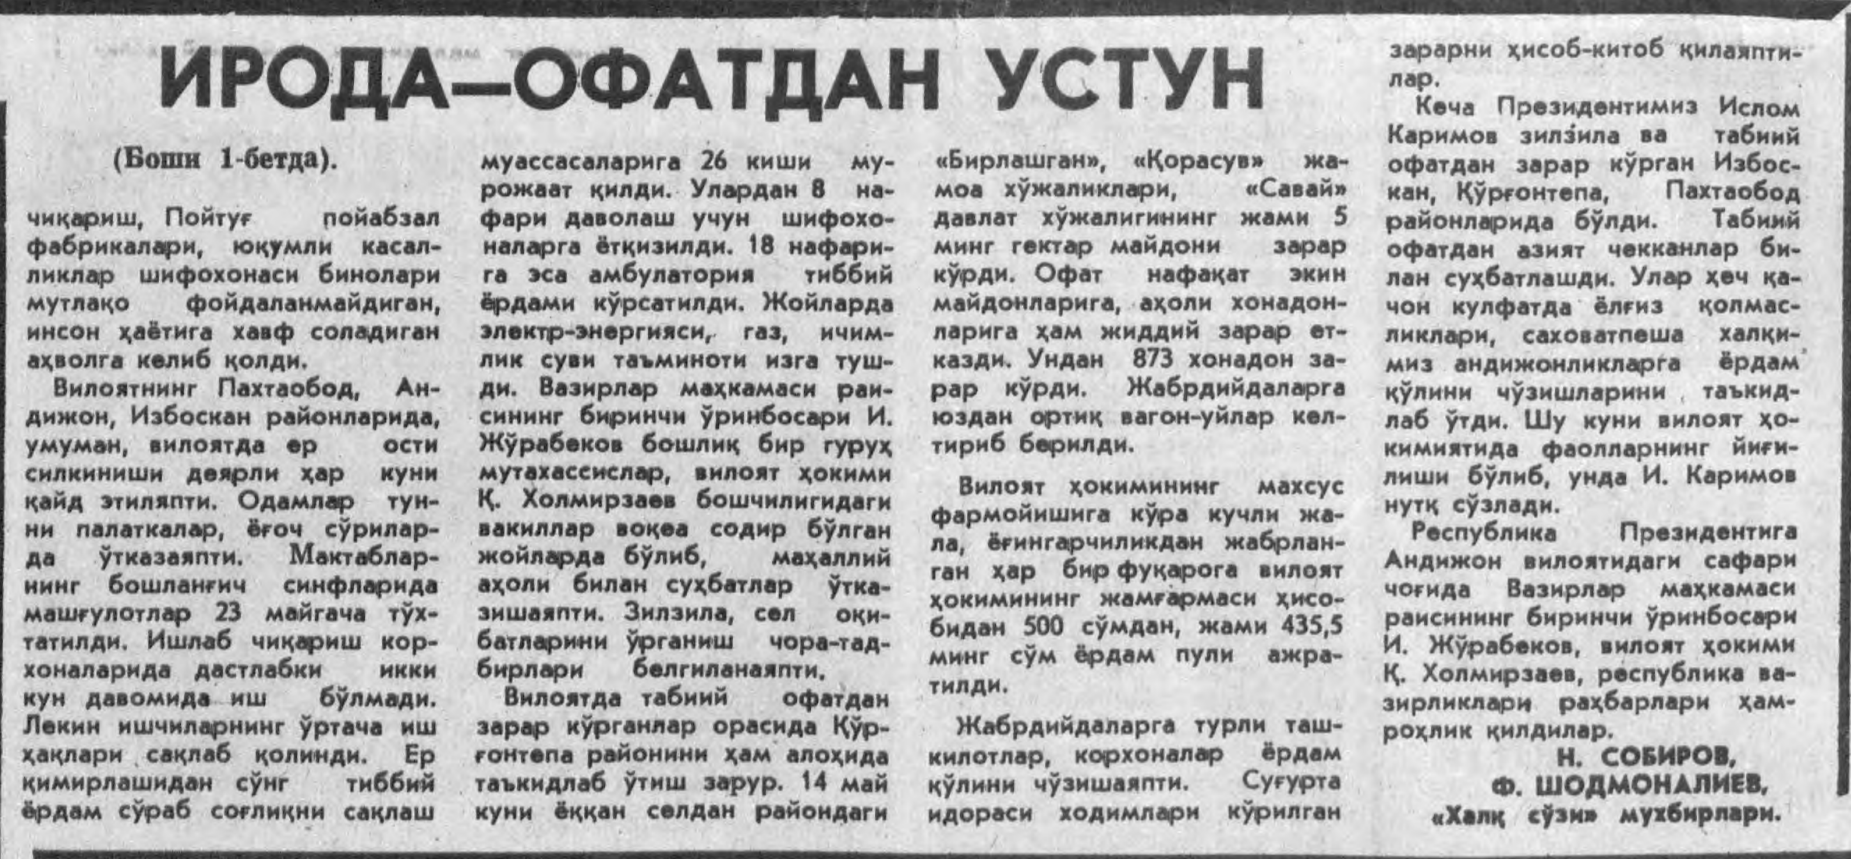 «Халқ сўзи» газетасининг 1992 йил 20 май сонидан лавҳа